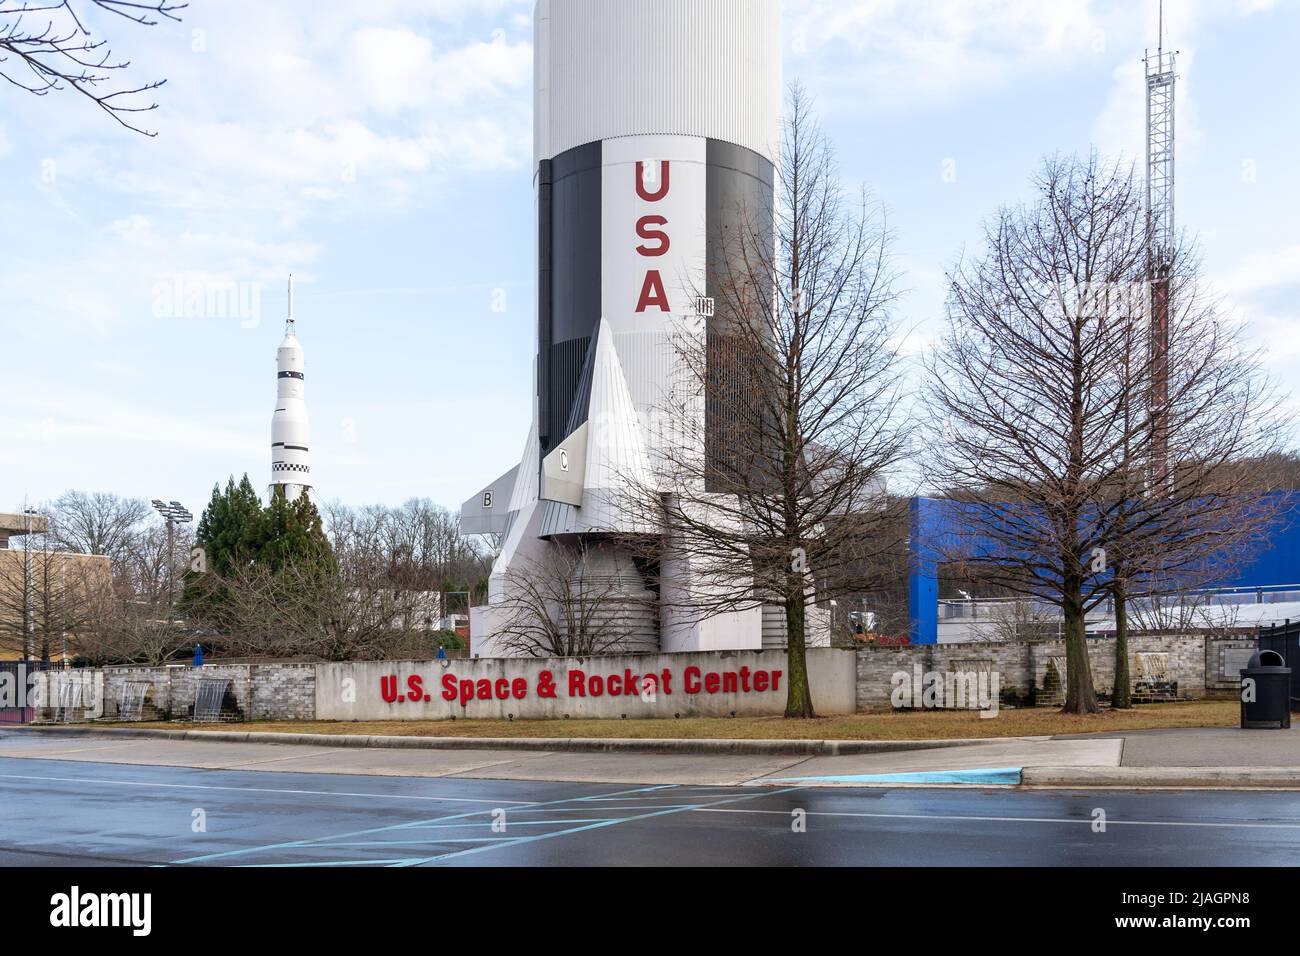 Huntsville, Alabama, USA - 29. Dezember 2021: Die Basis der Saturn-V-Rakete im U.S. Space and Rocket Center in Huntsville, Alabama, USA. Stockfoto